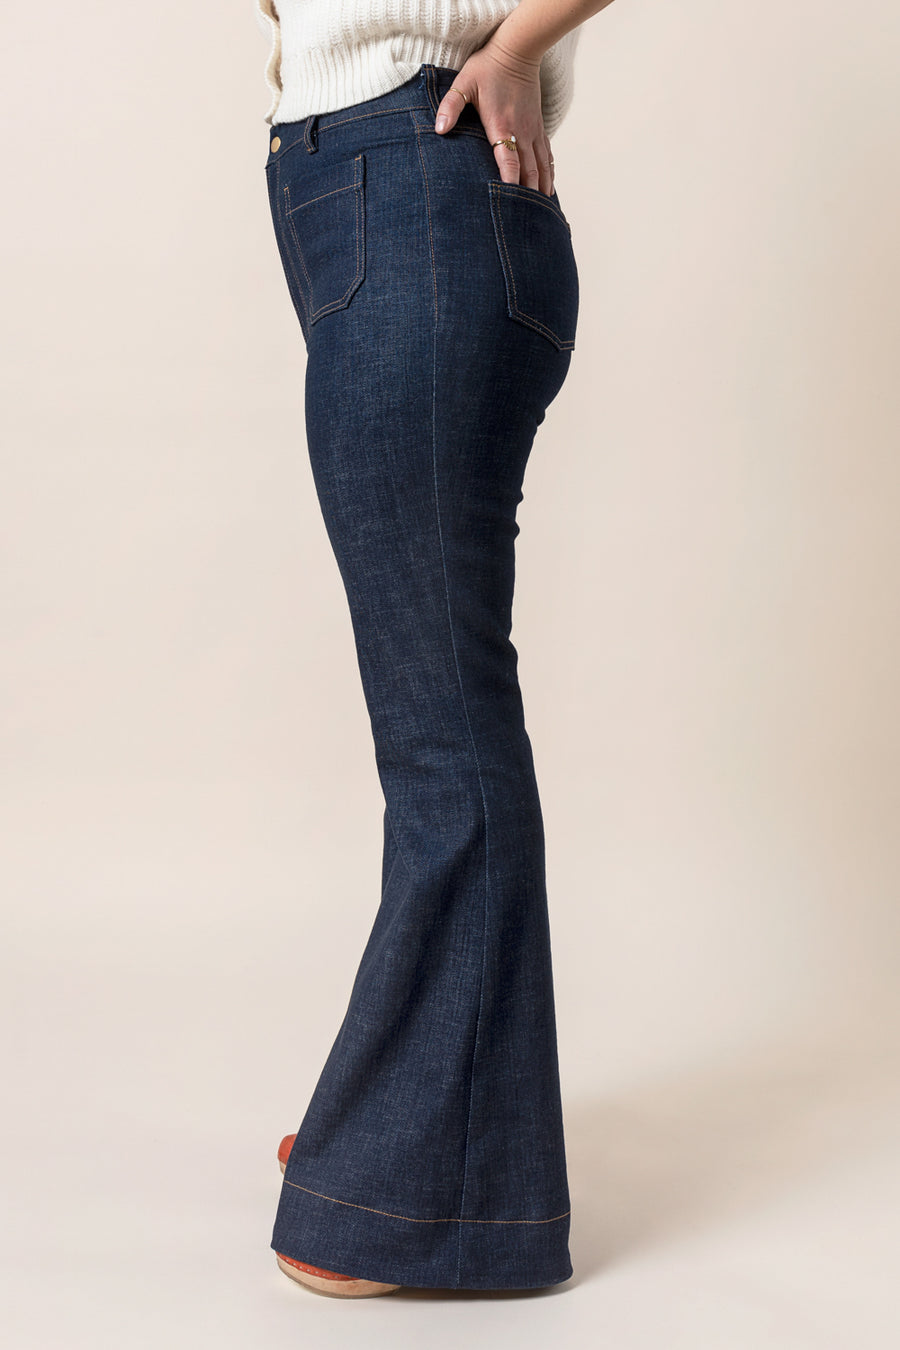 Lucia Front Slit Jeans - Medium Wash